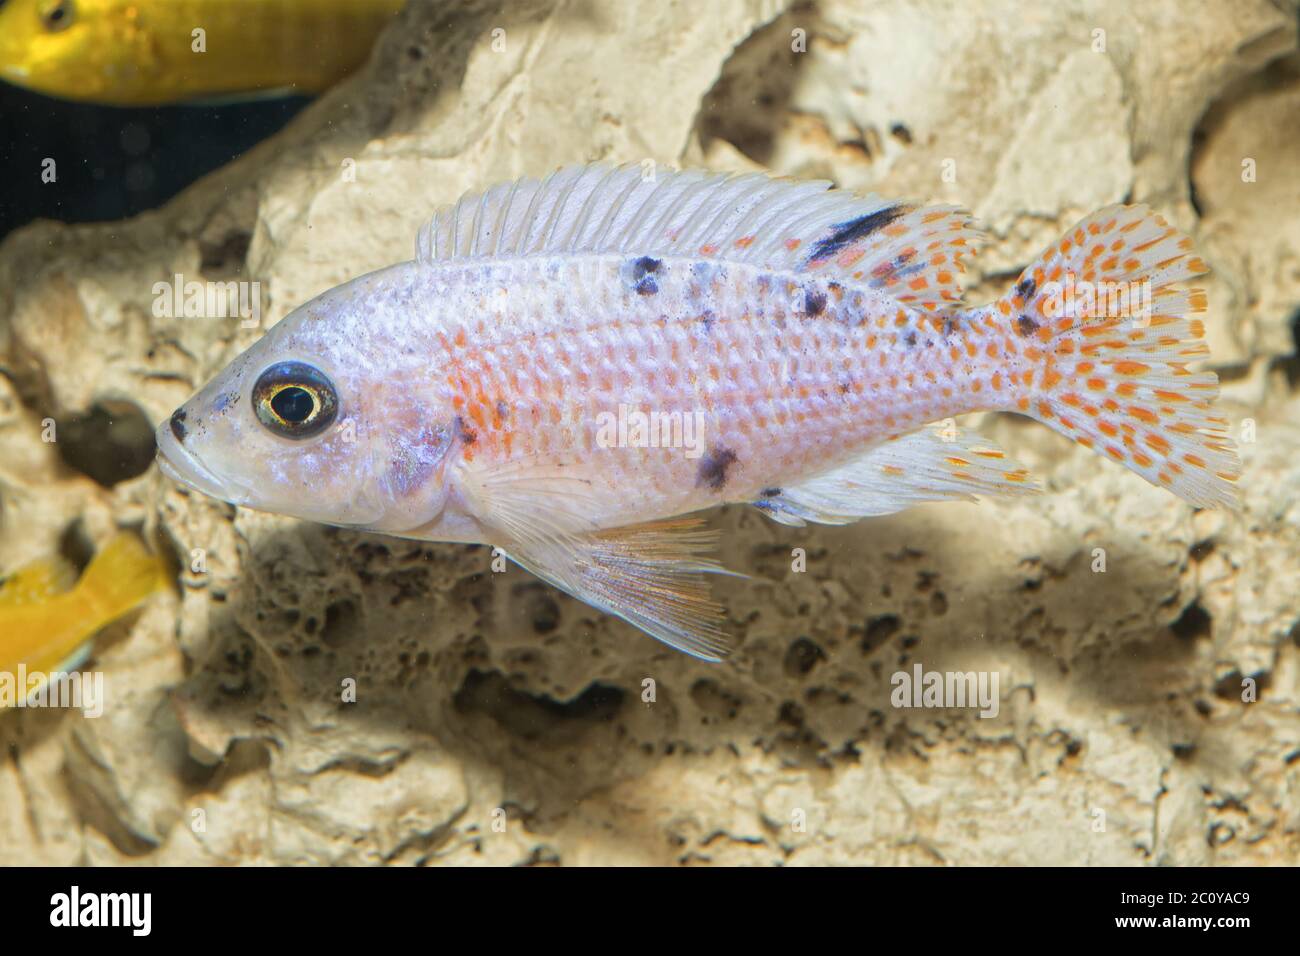 Cichlid fish from genus Aulonocara Stock Photo